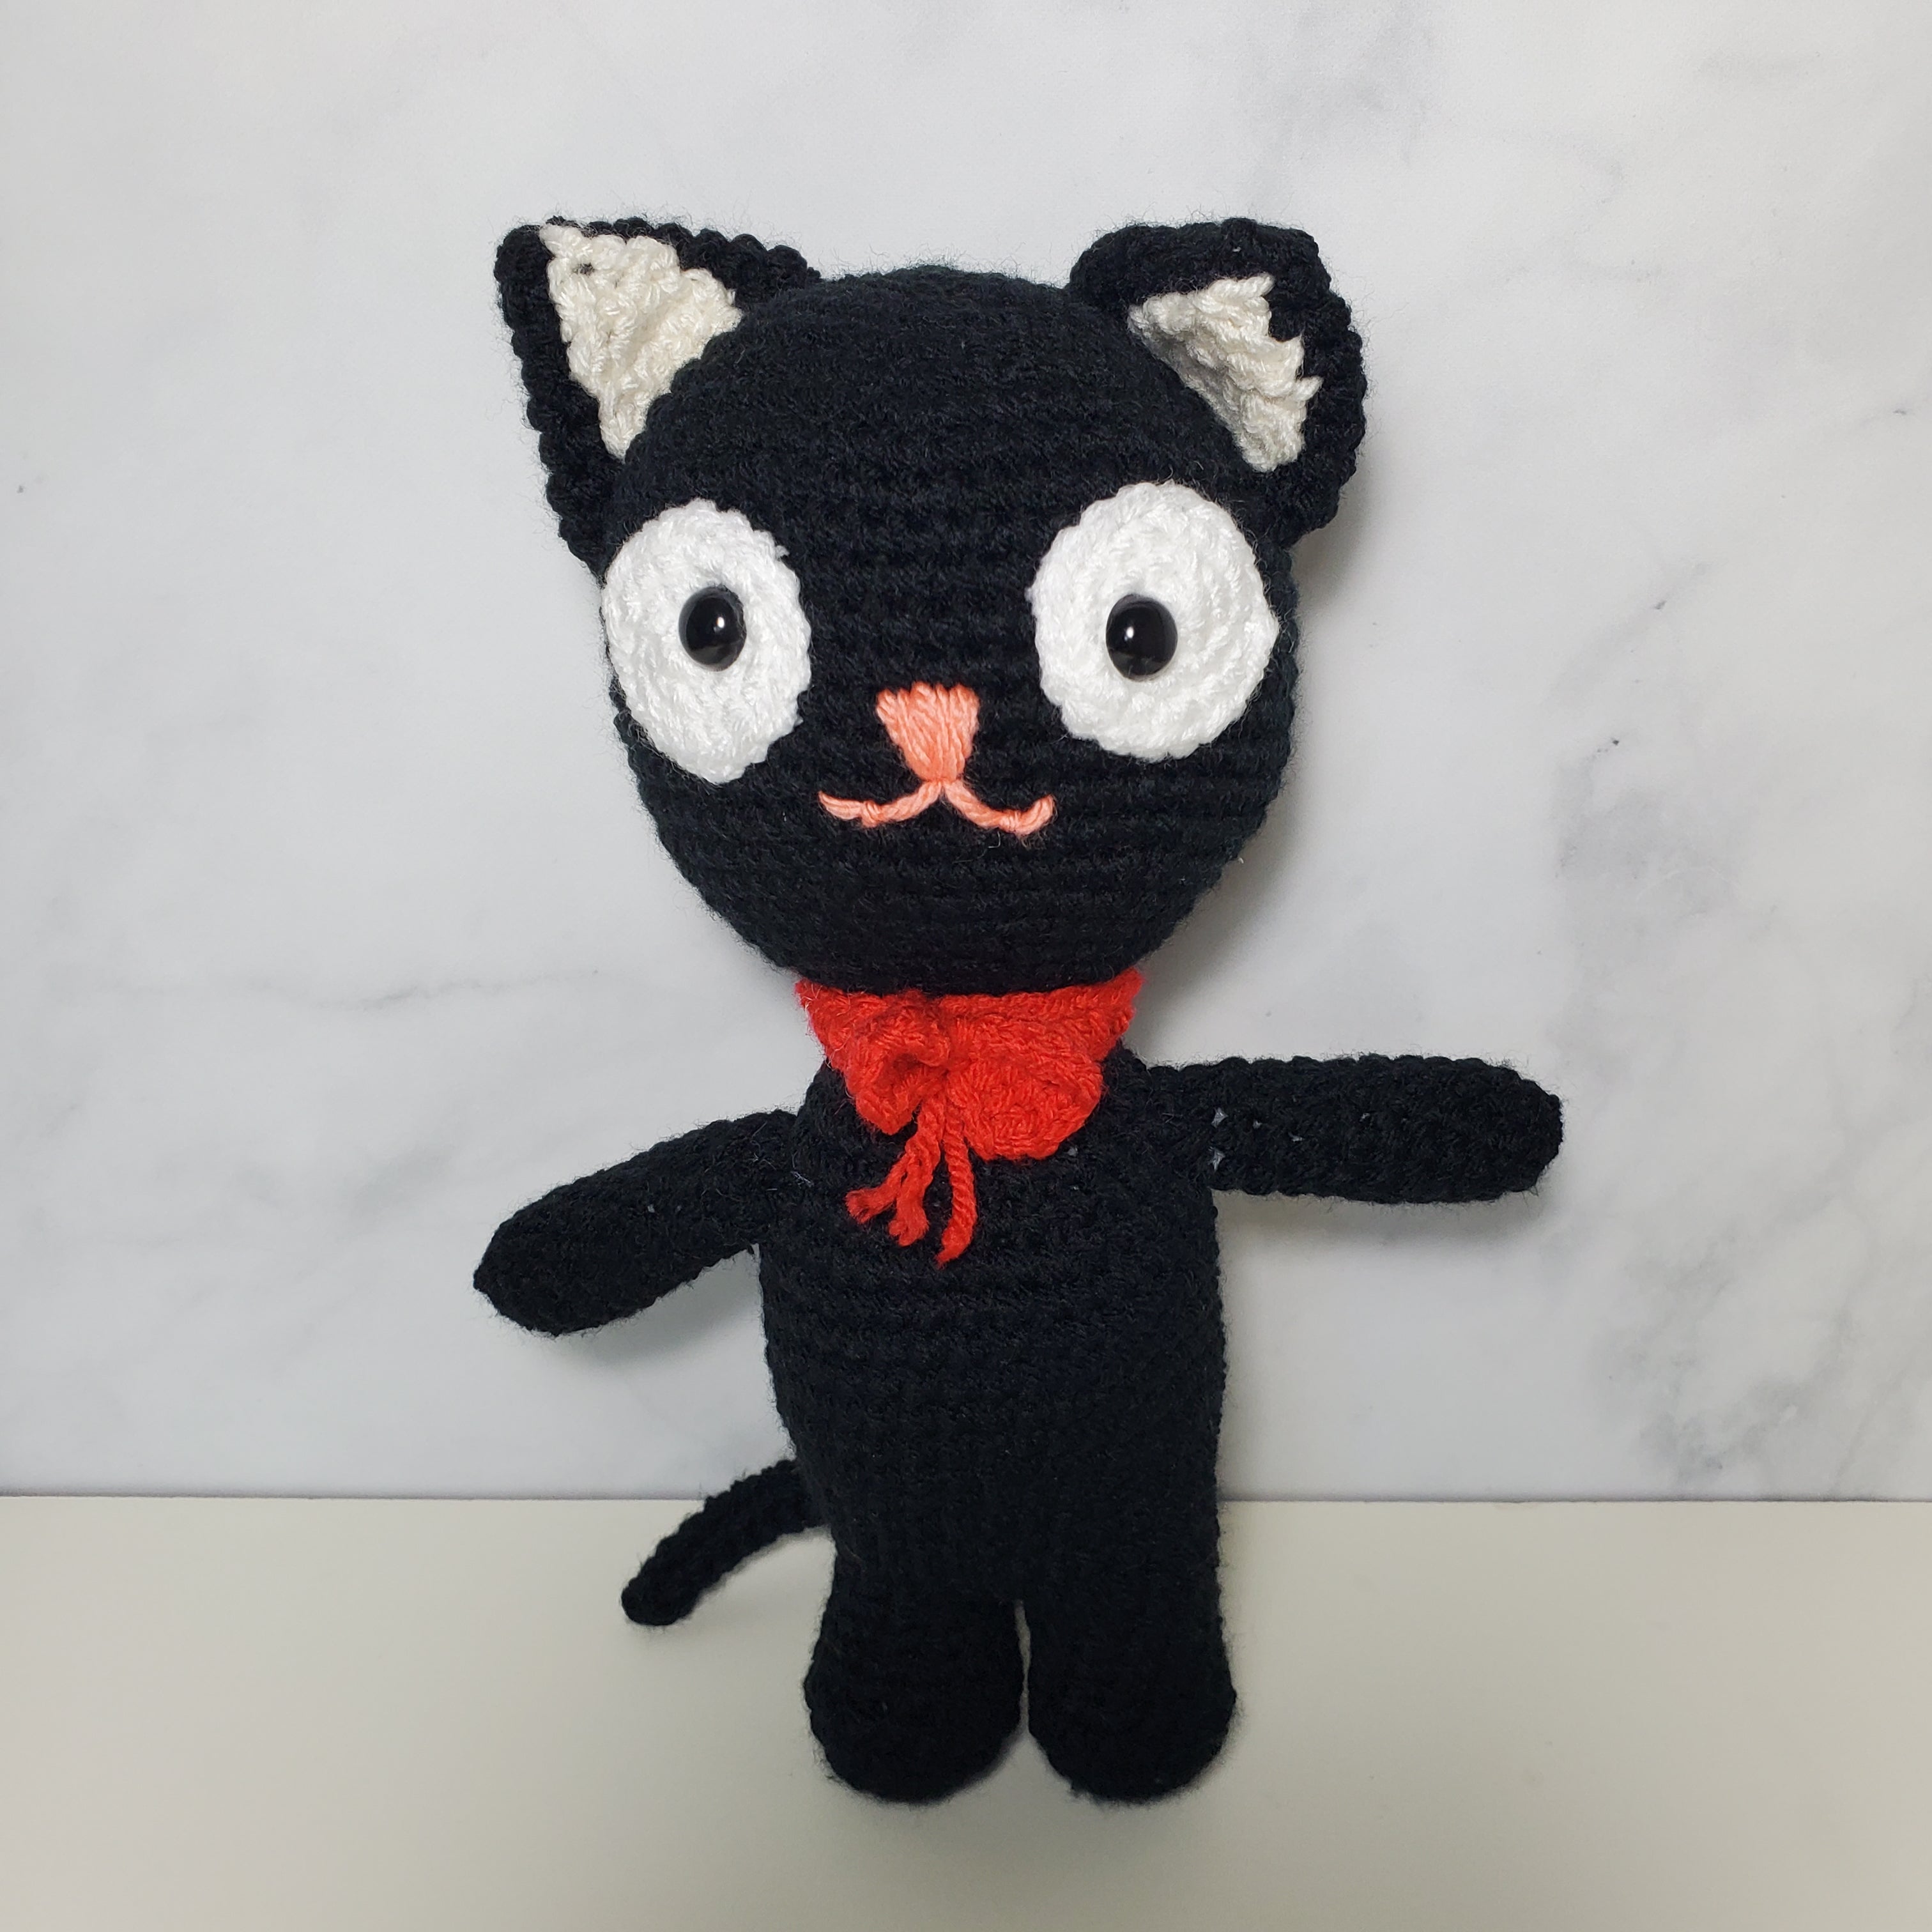 Crochet Character - Bow Tie Black Cat